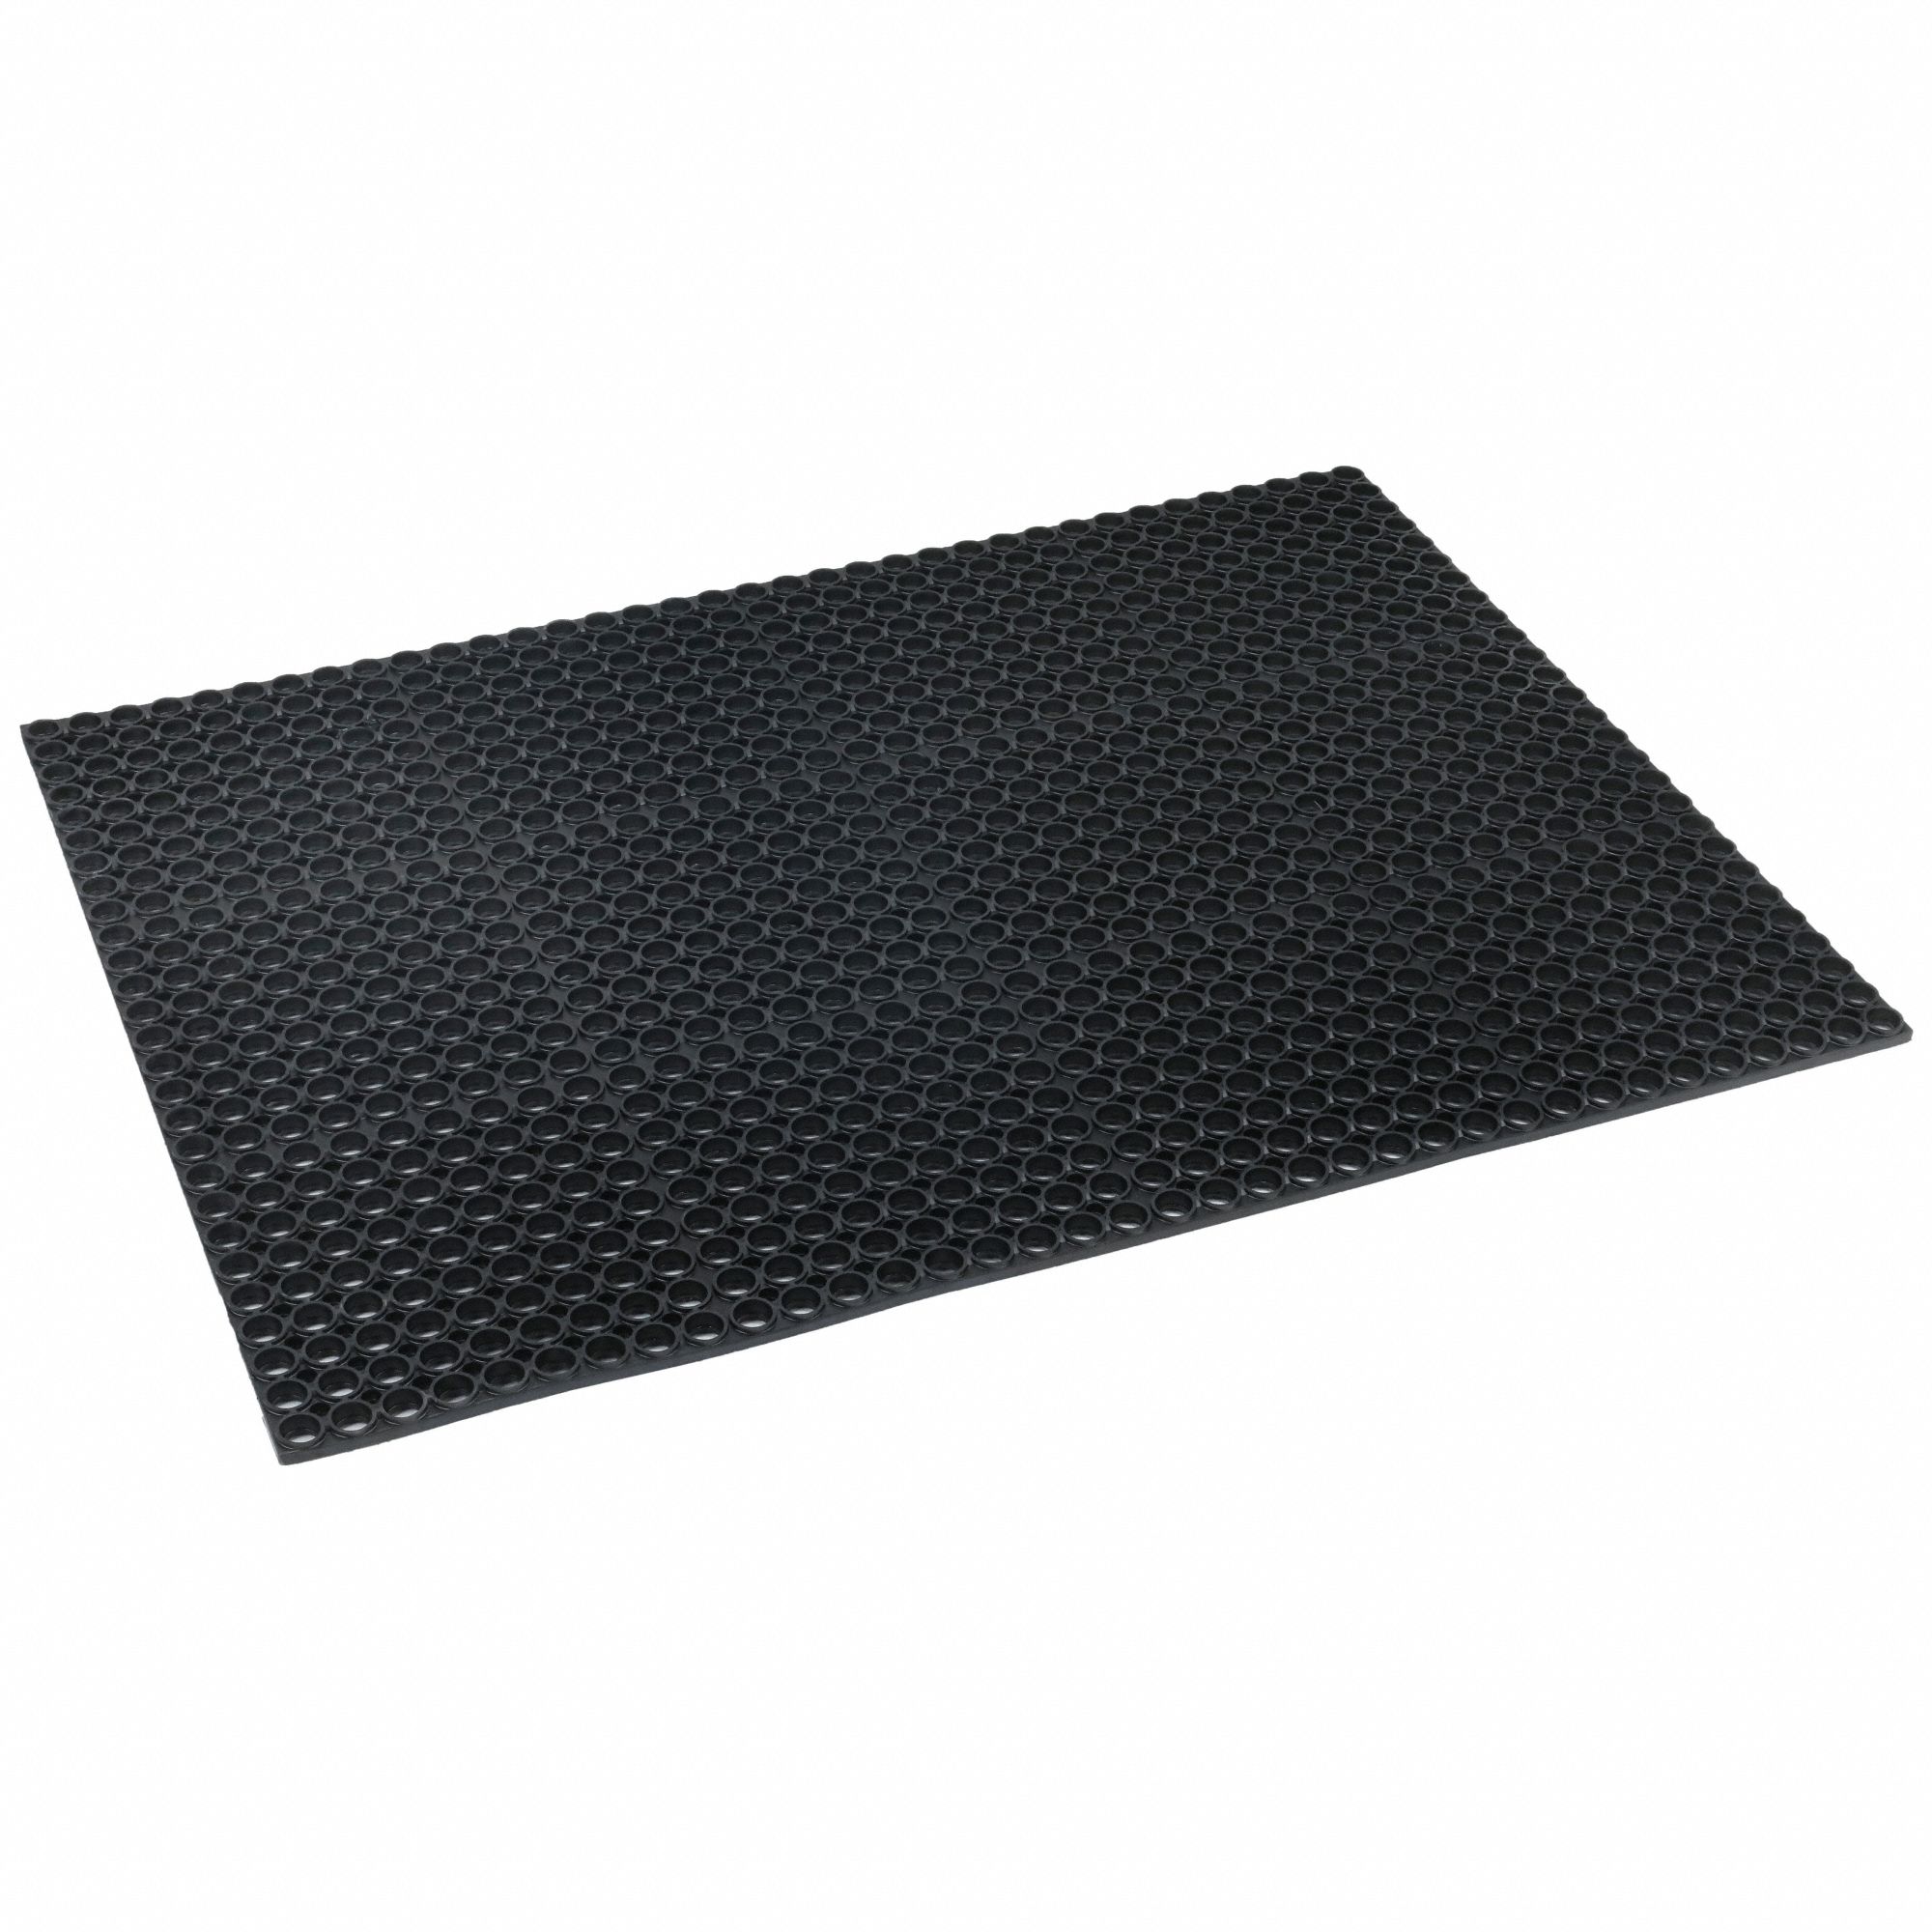 Choice 3' x 3' Black Rubber Connectable Anti-Fatigue Floor Mat - 1